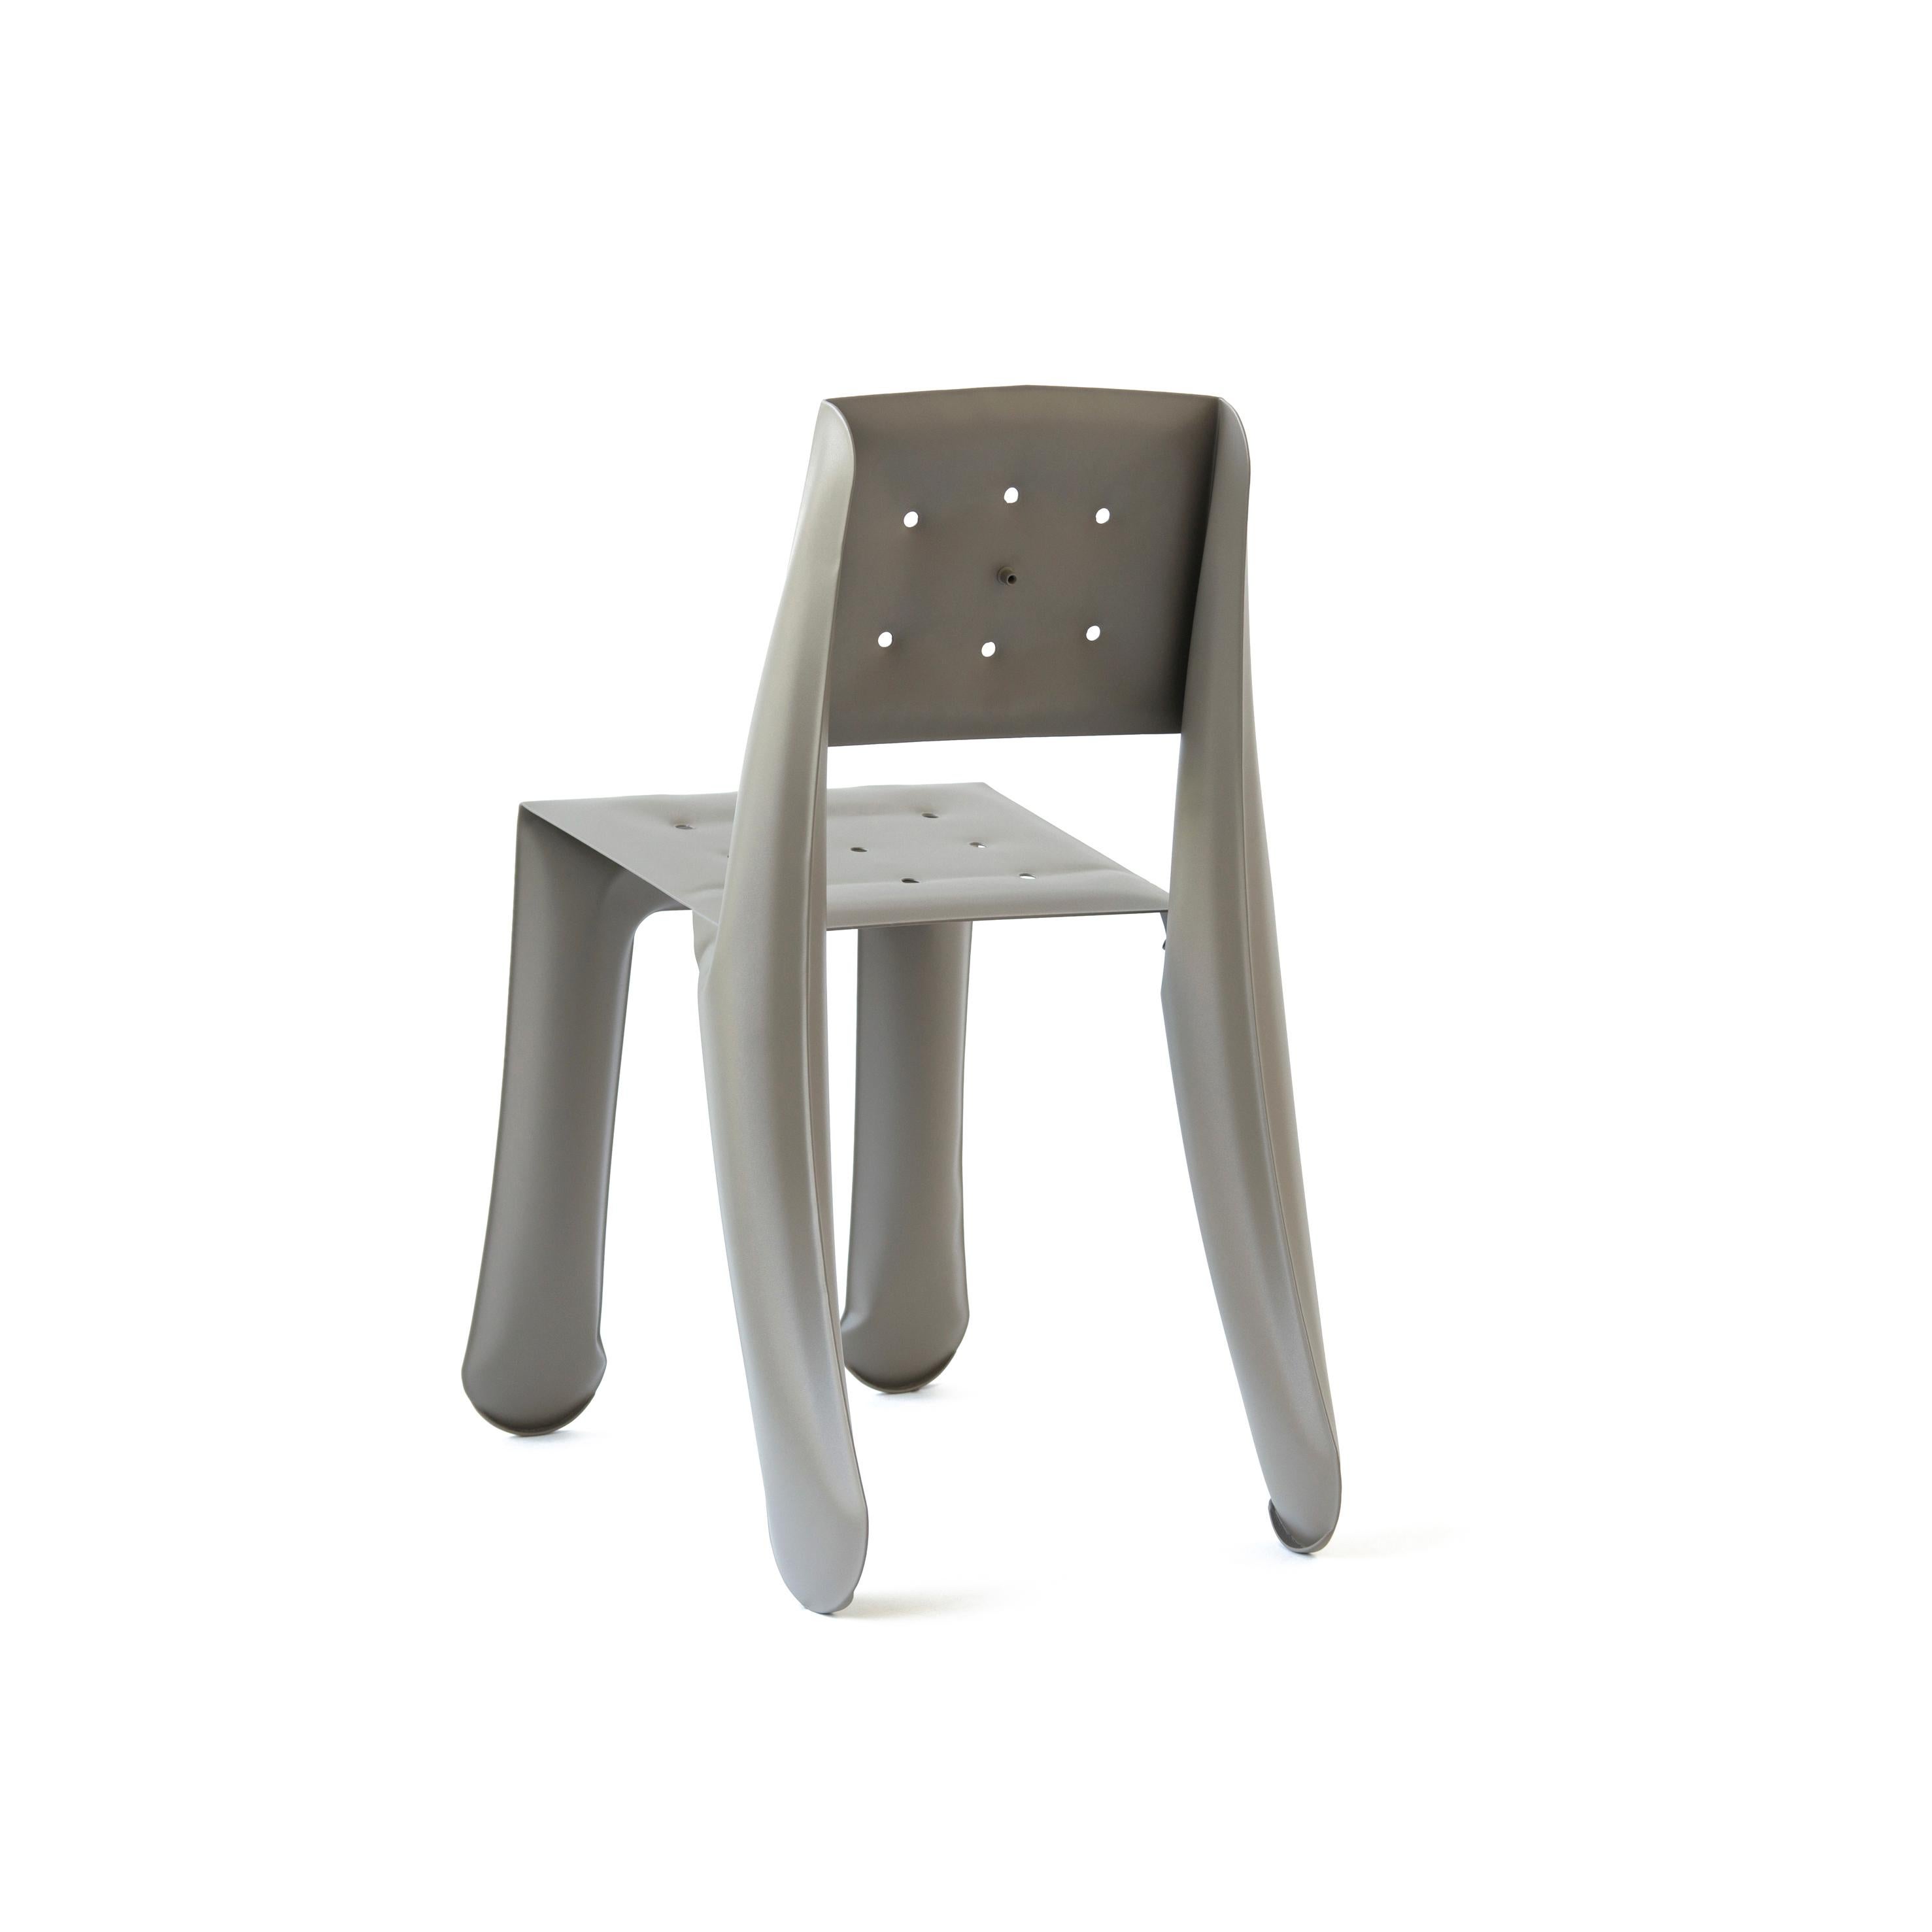 Beige Aluminum Chippensteel 0.5 Sculptural Chair by Zieta In New Condition For Sale In Geneve, CH